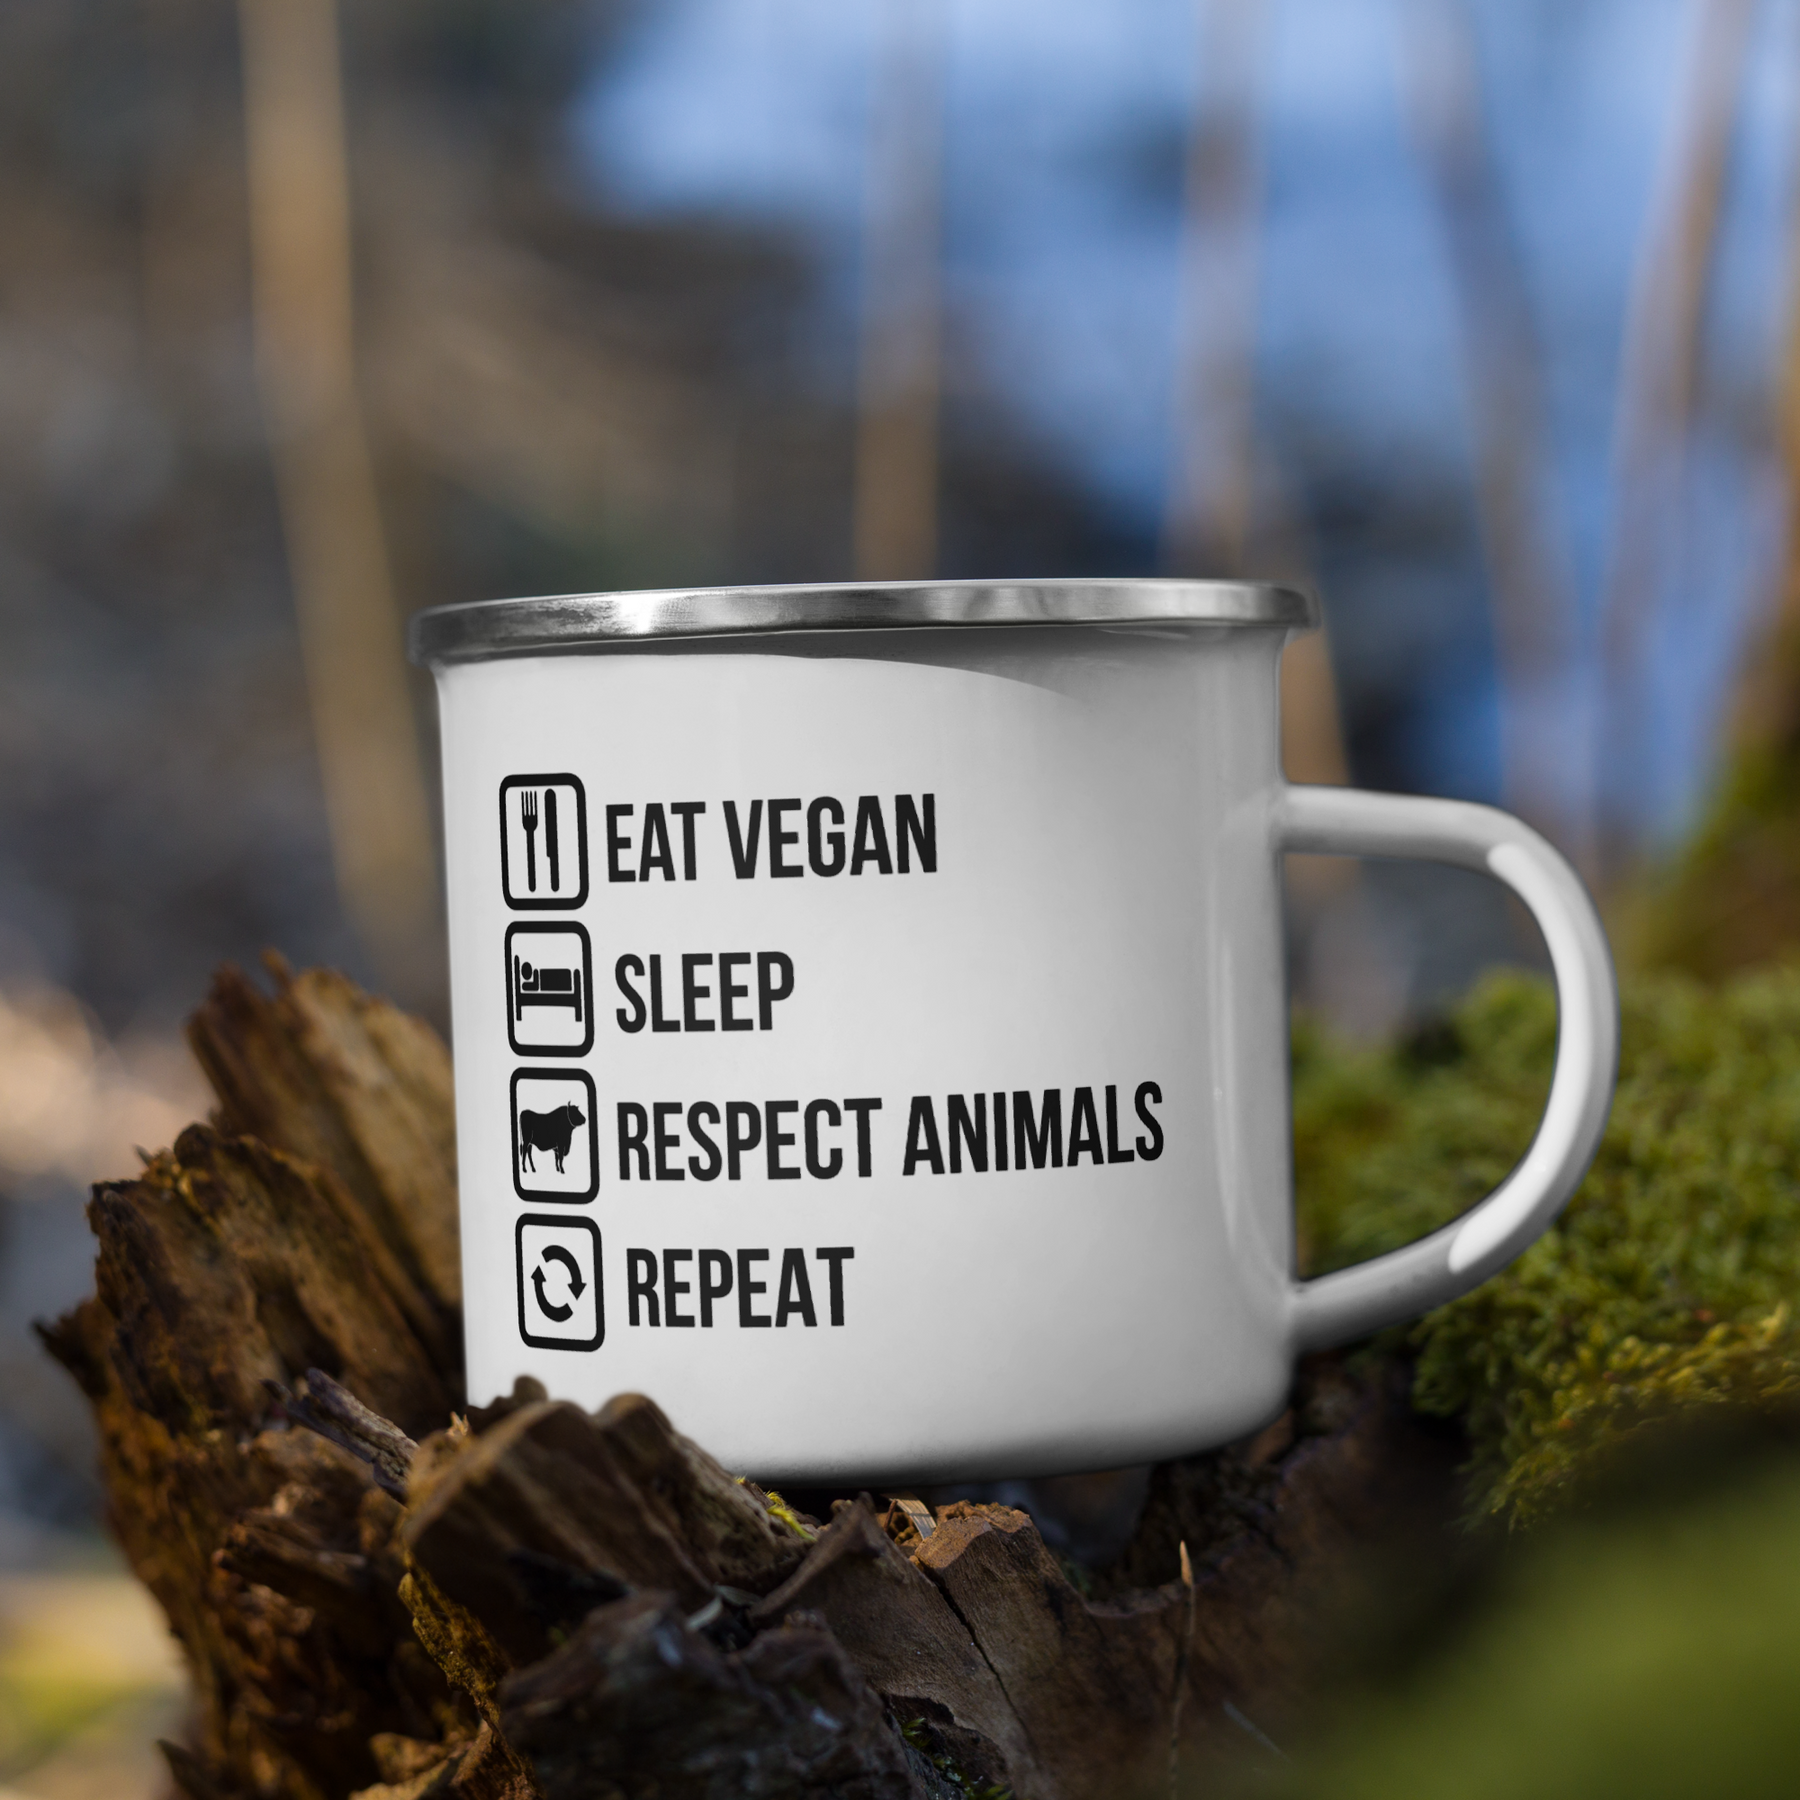 EAT VEGAN RESPECT ANIMALS REPEAT Enamel Mug